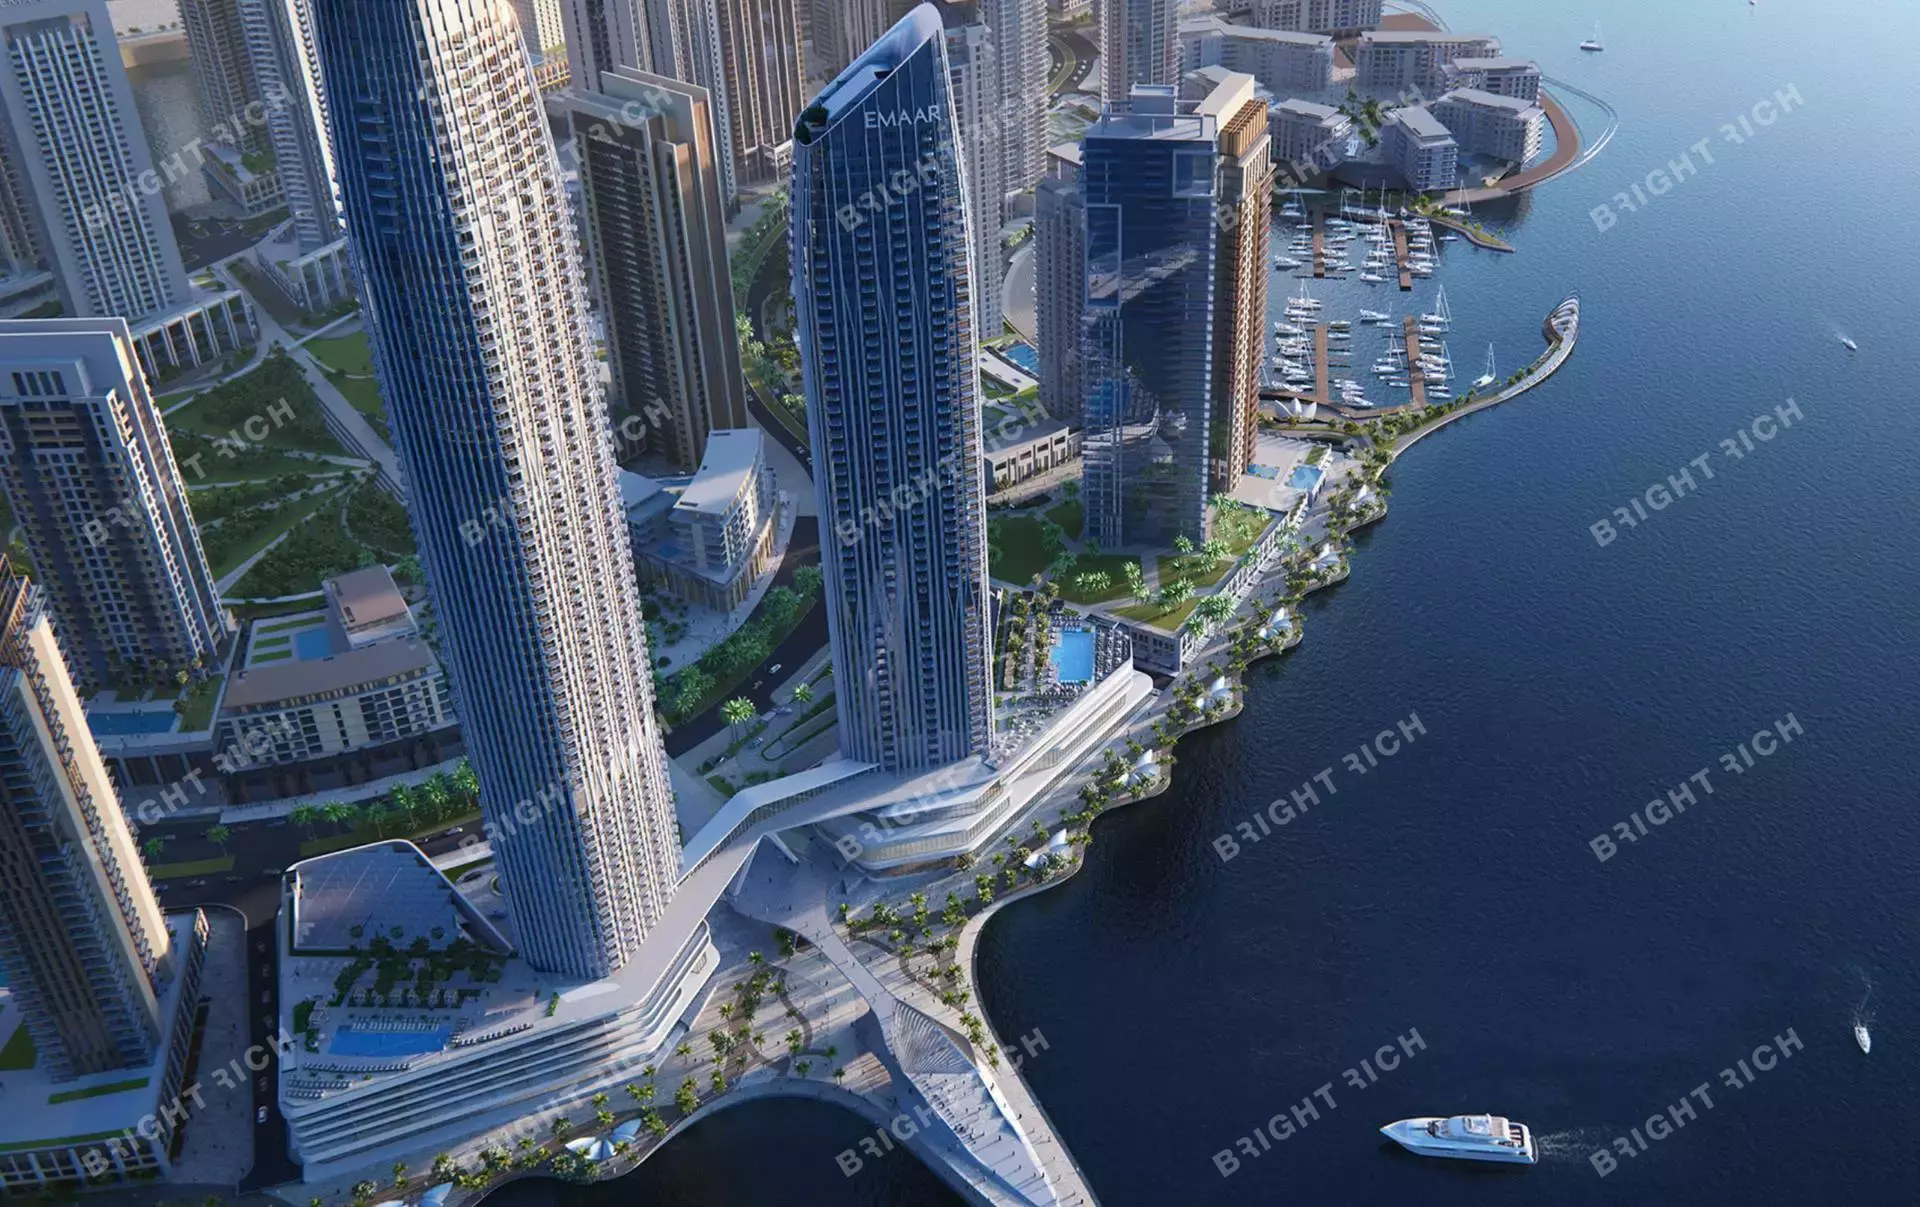 Address Harbour Point, apart complex in Dubai